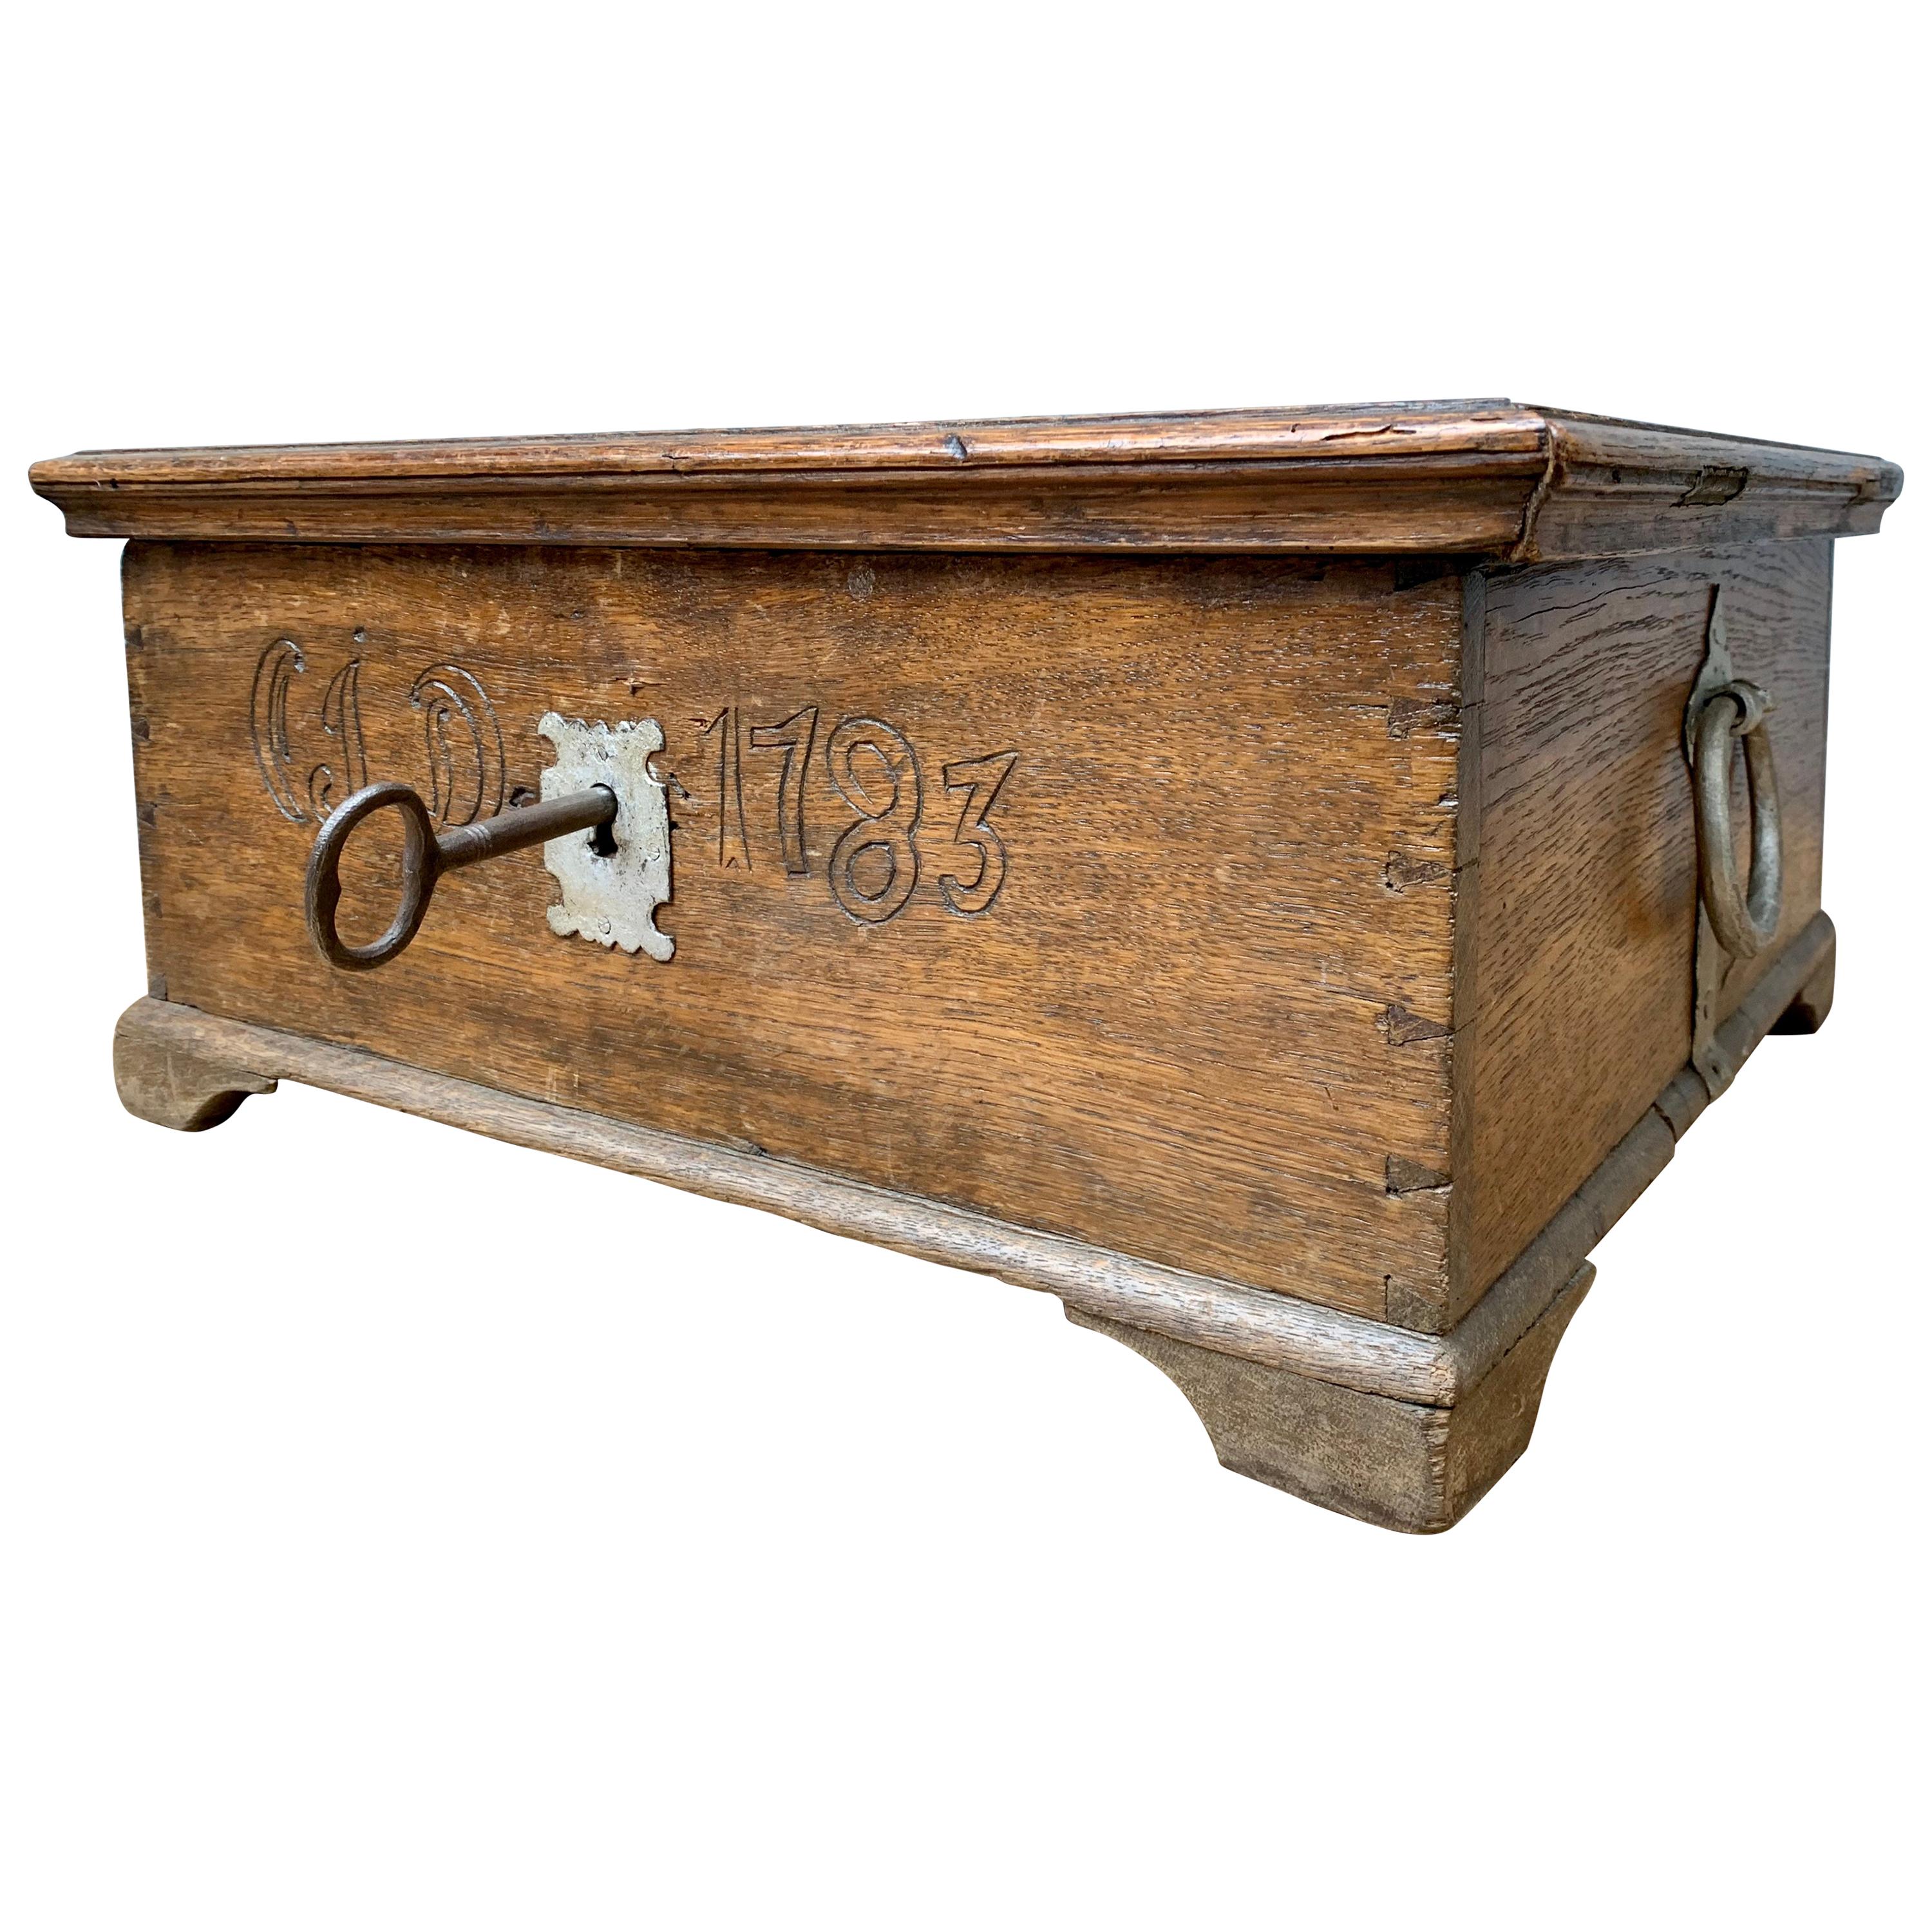 Swedish Folk Art Oak Box, Dated 1783